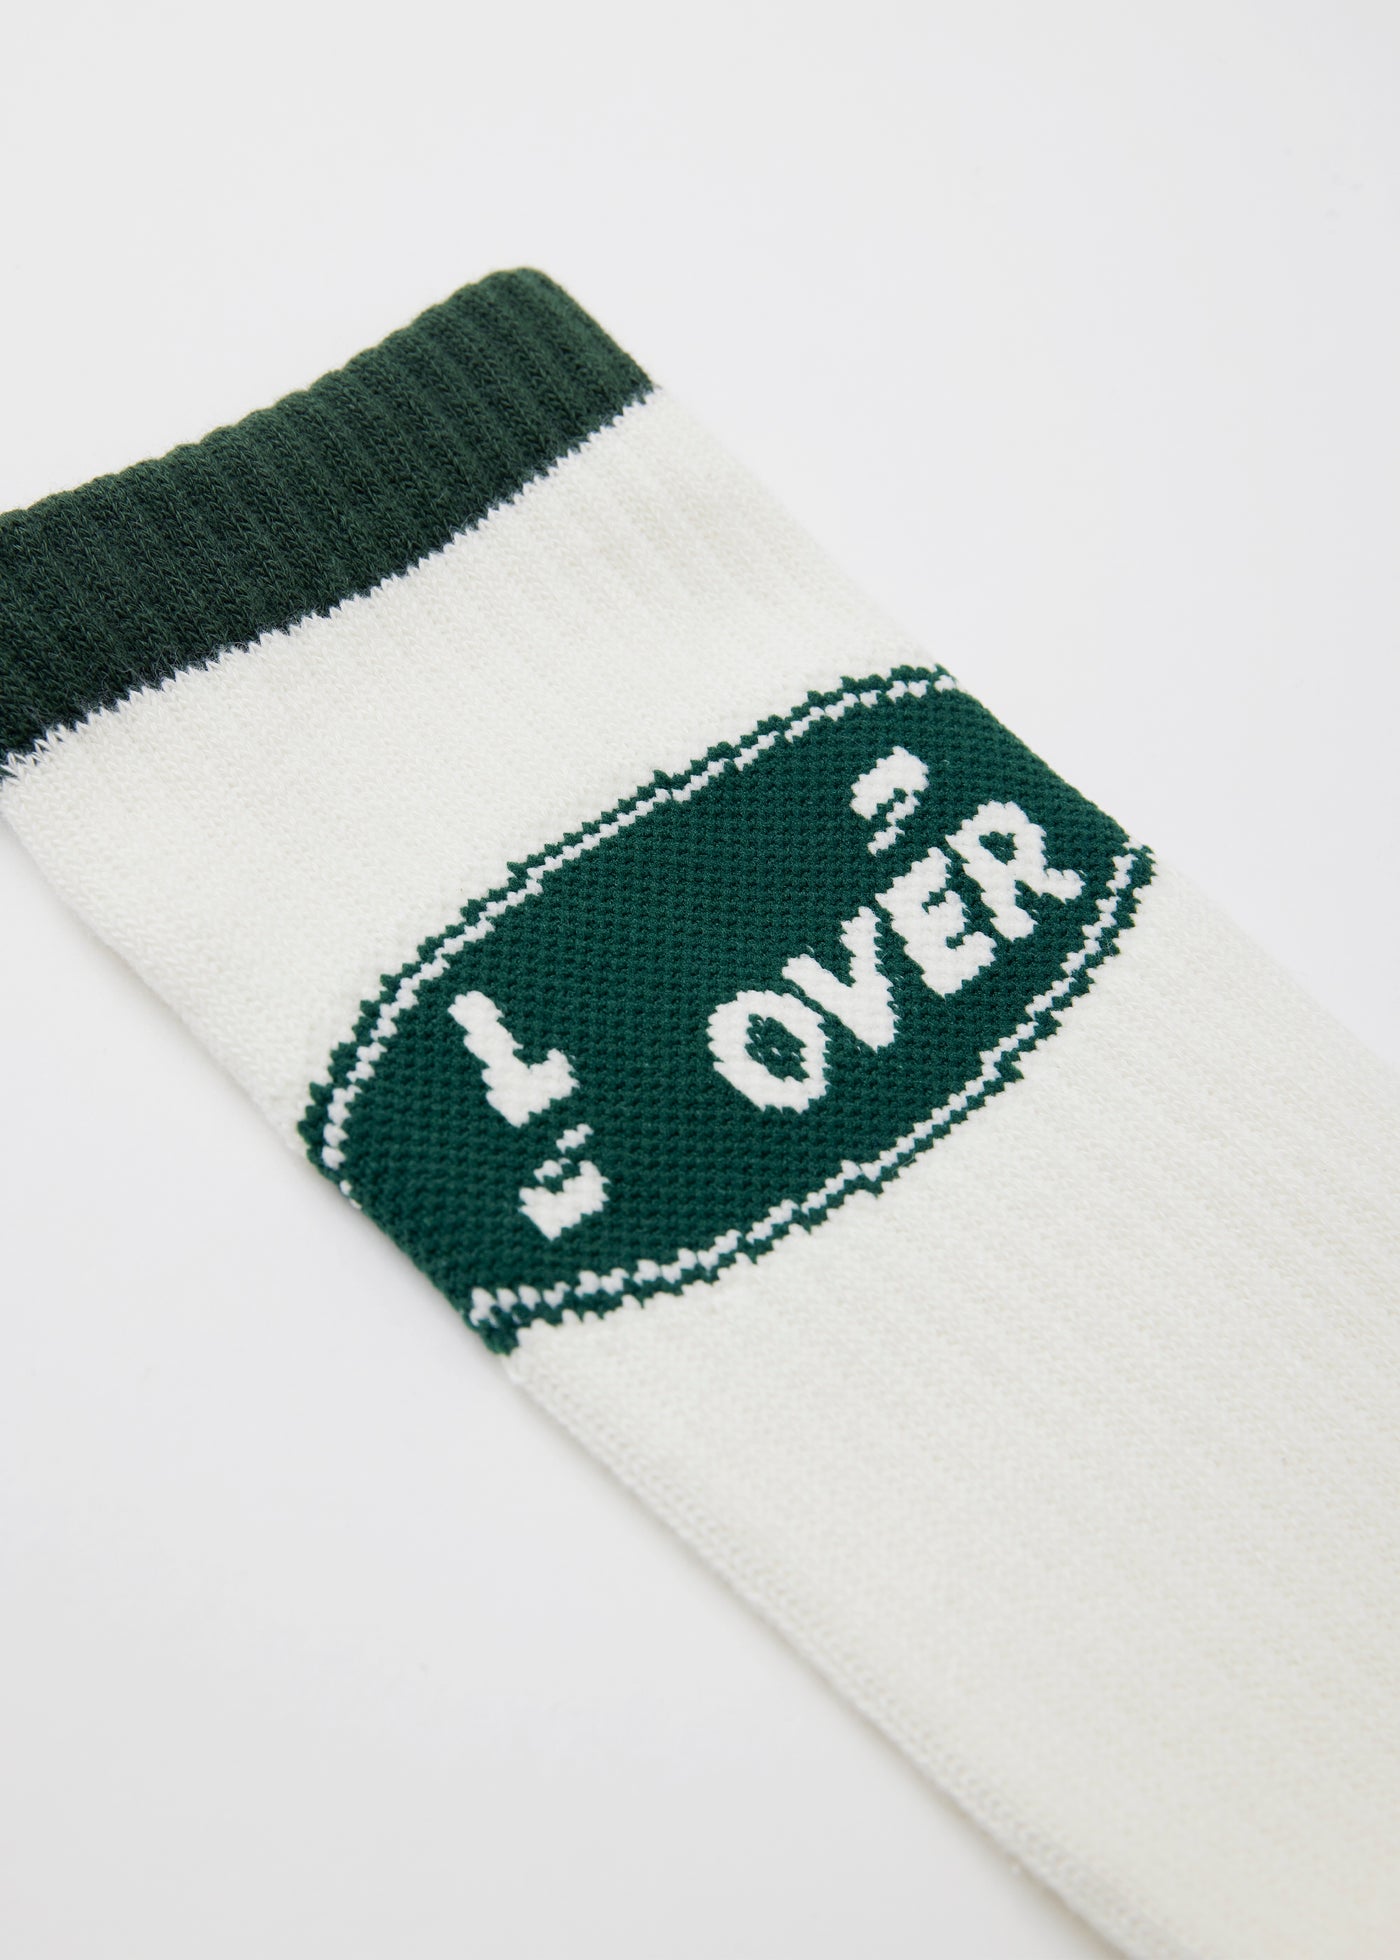 LOVER Socks